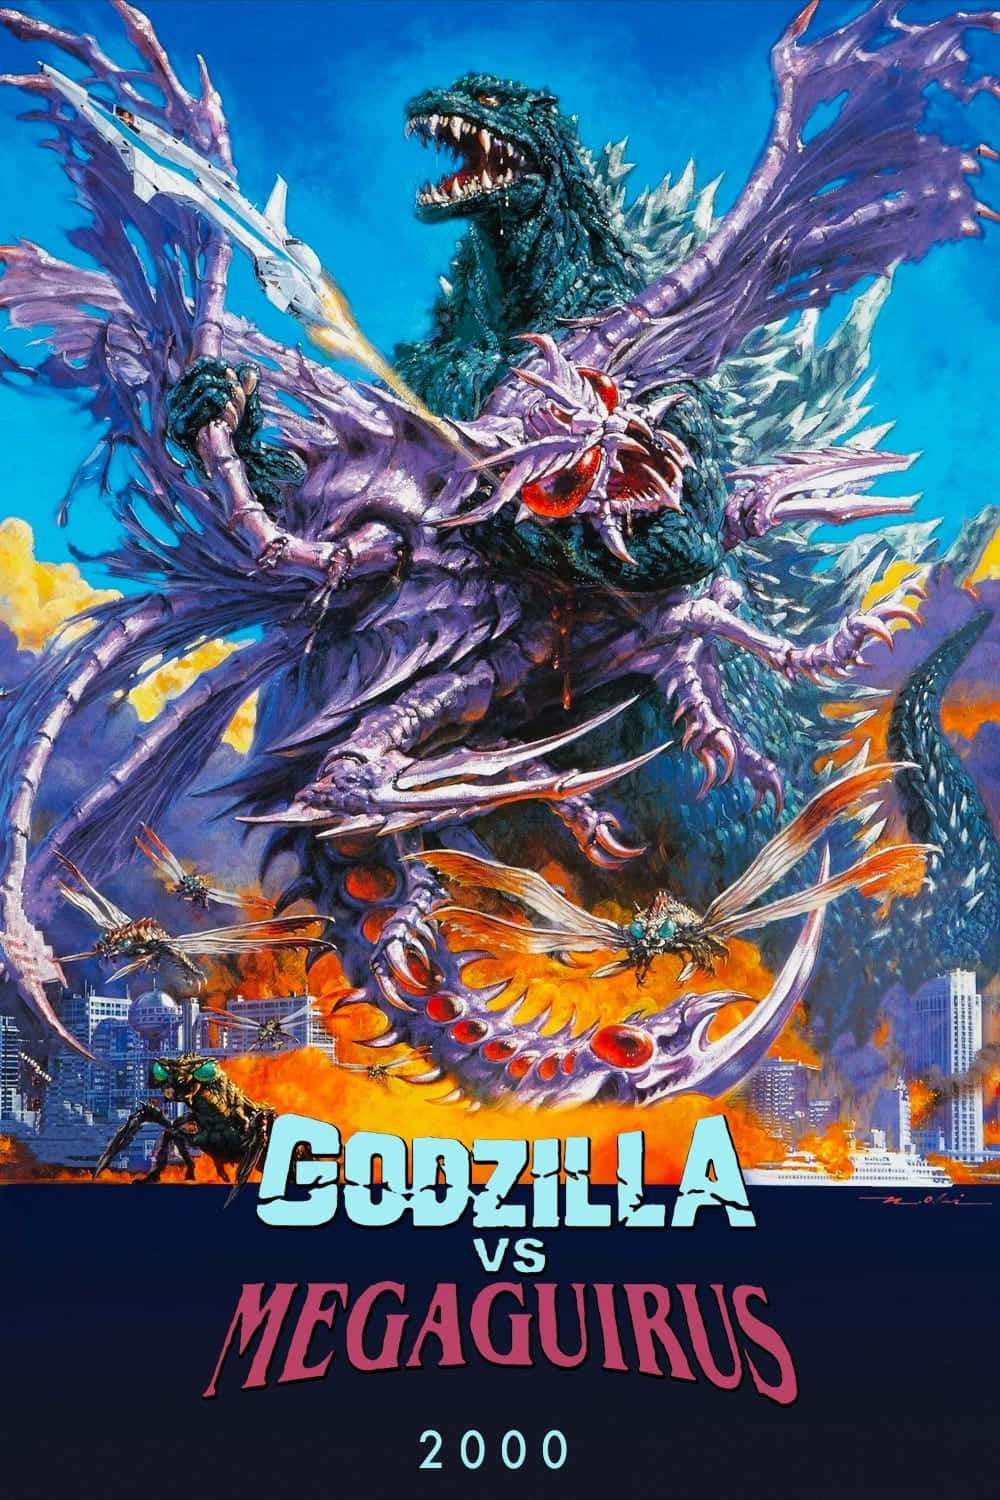 Godzilla facing off against Megaguirus in an epic battle Wallpaper